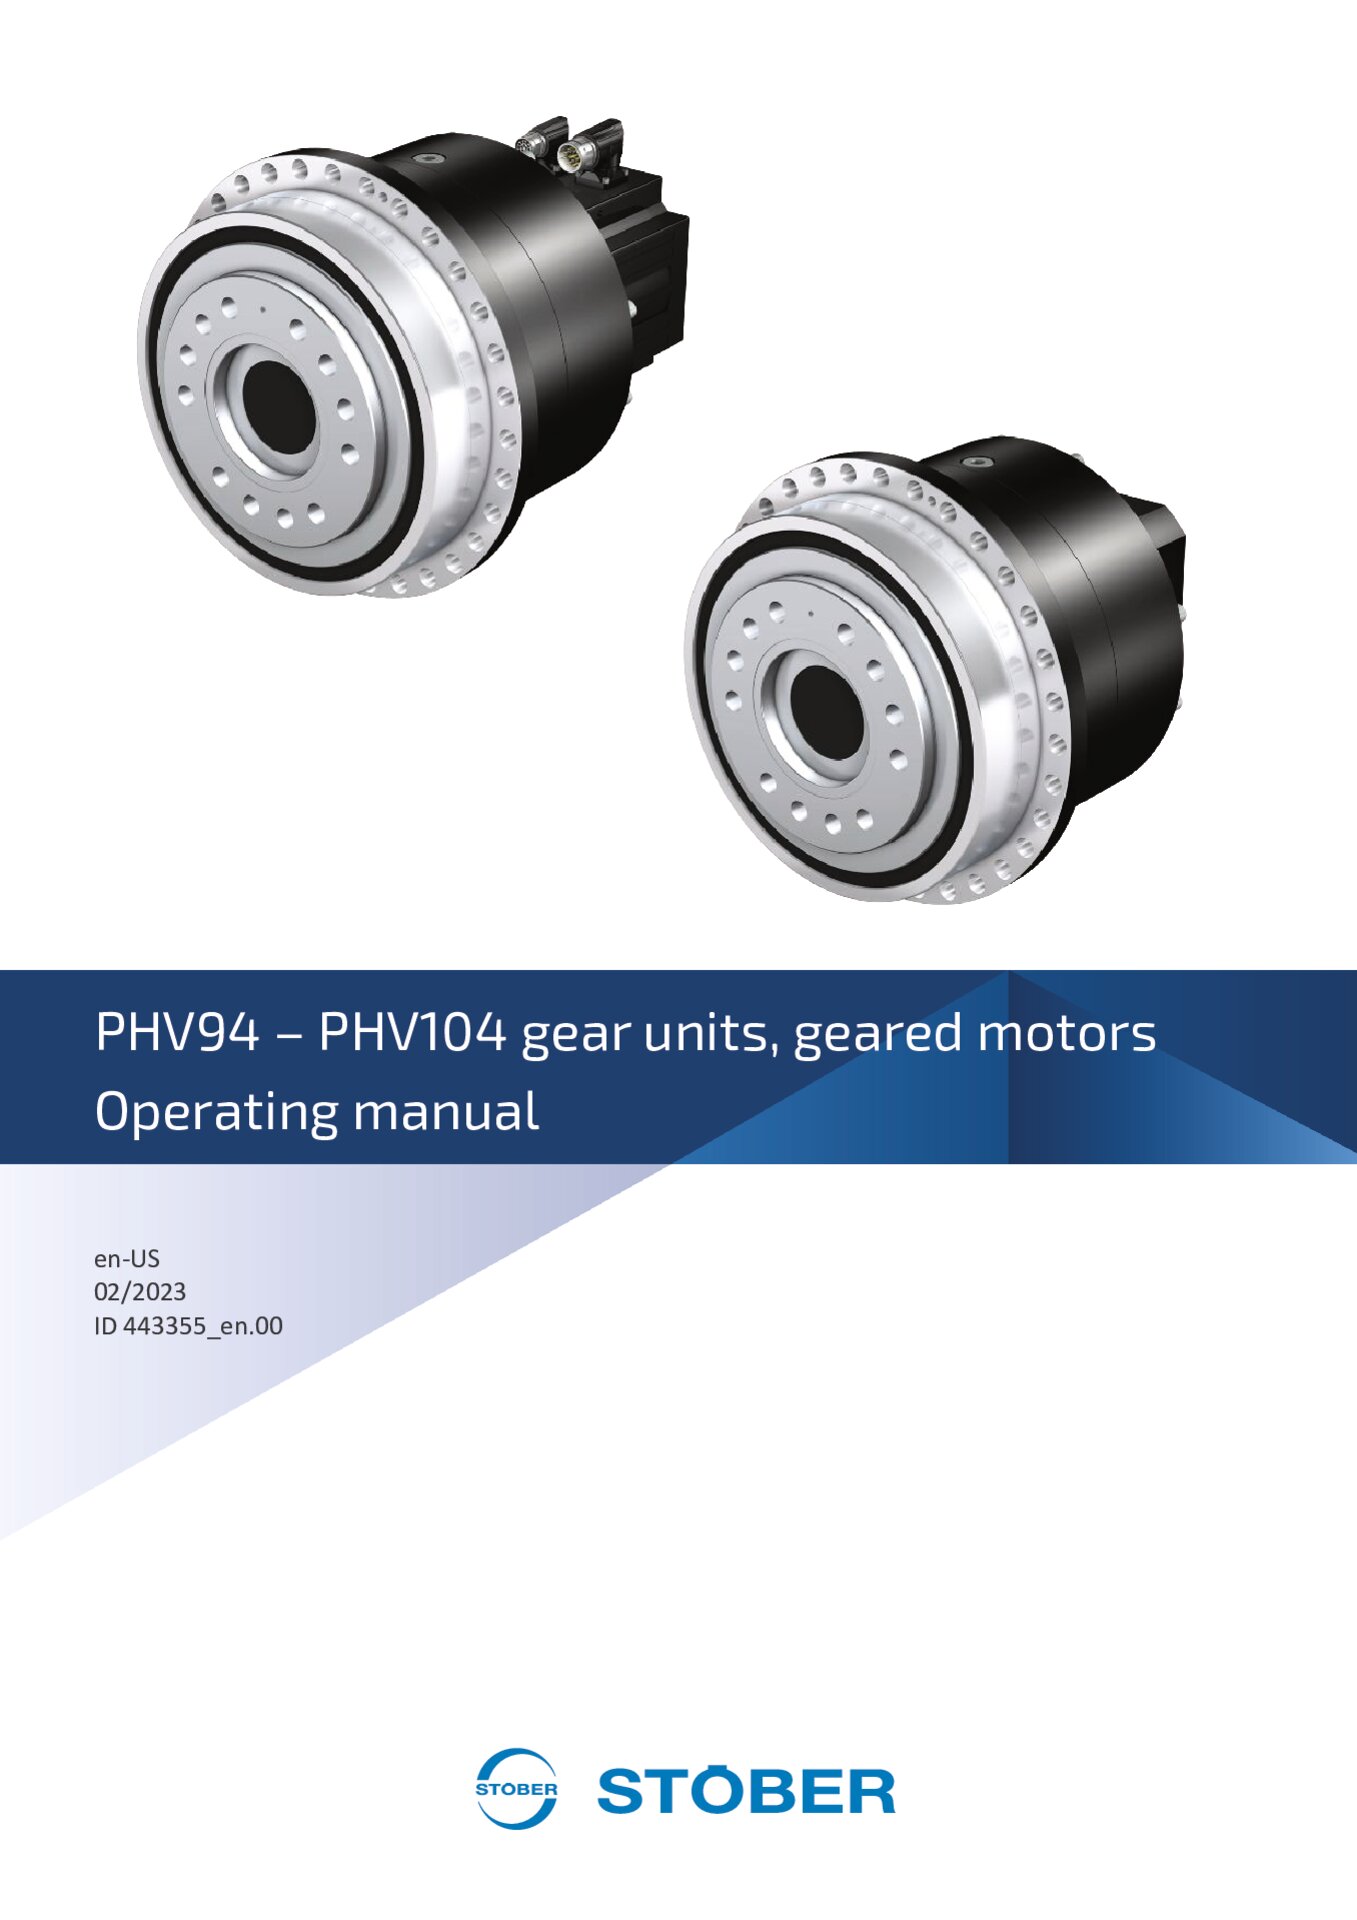 Operating manual PHV94-PHV104 gear units geared motors